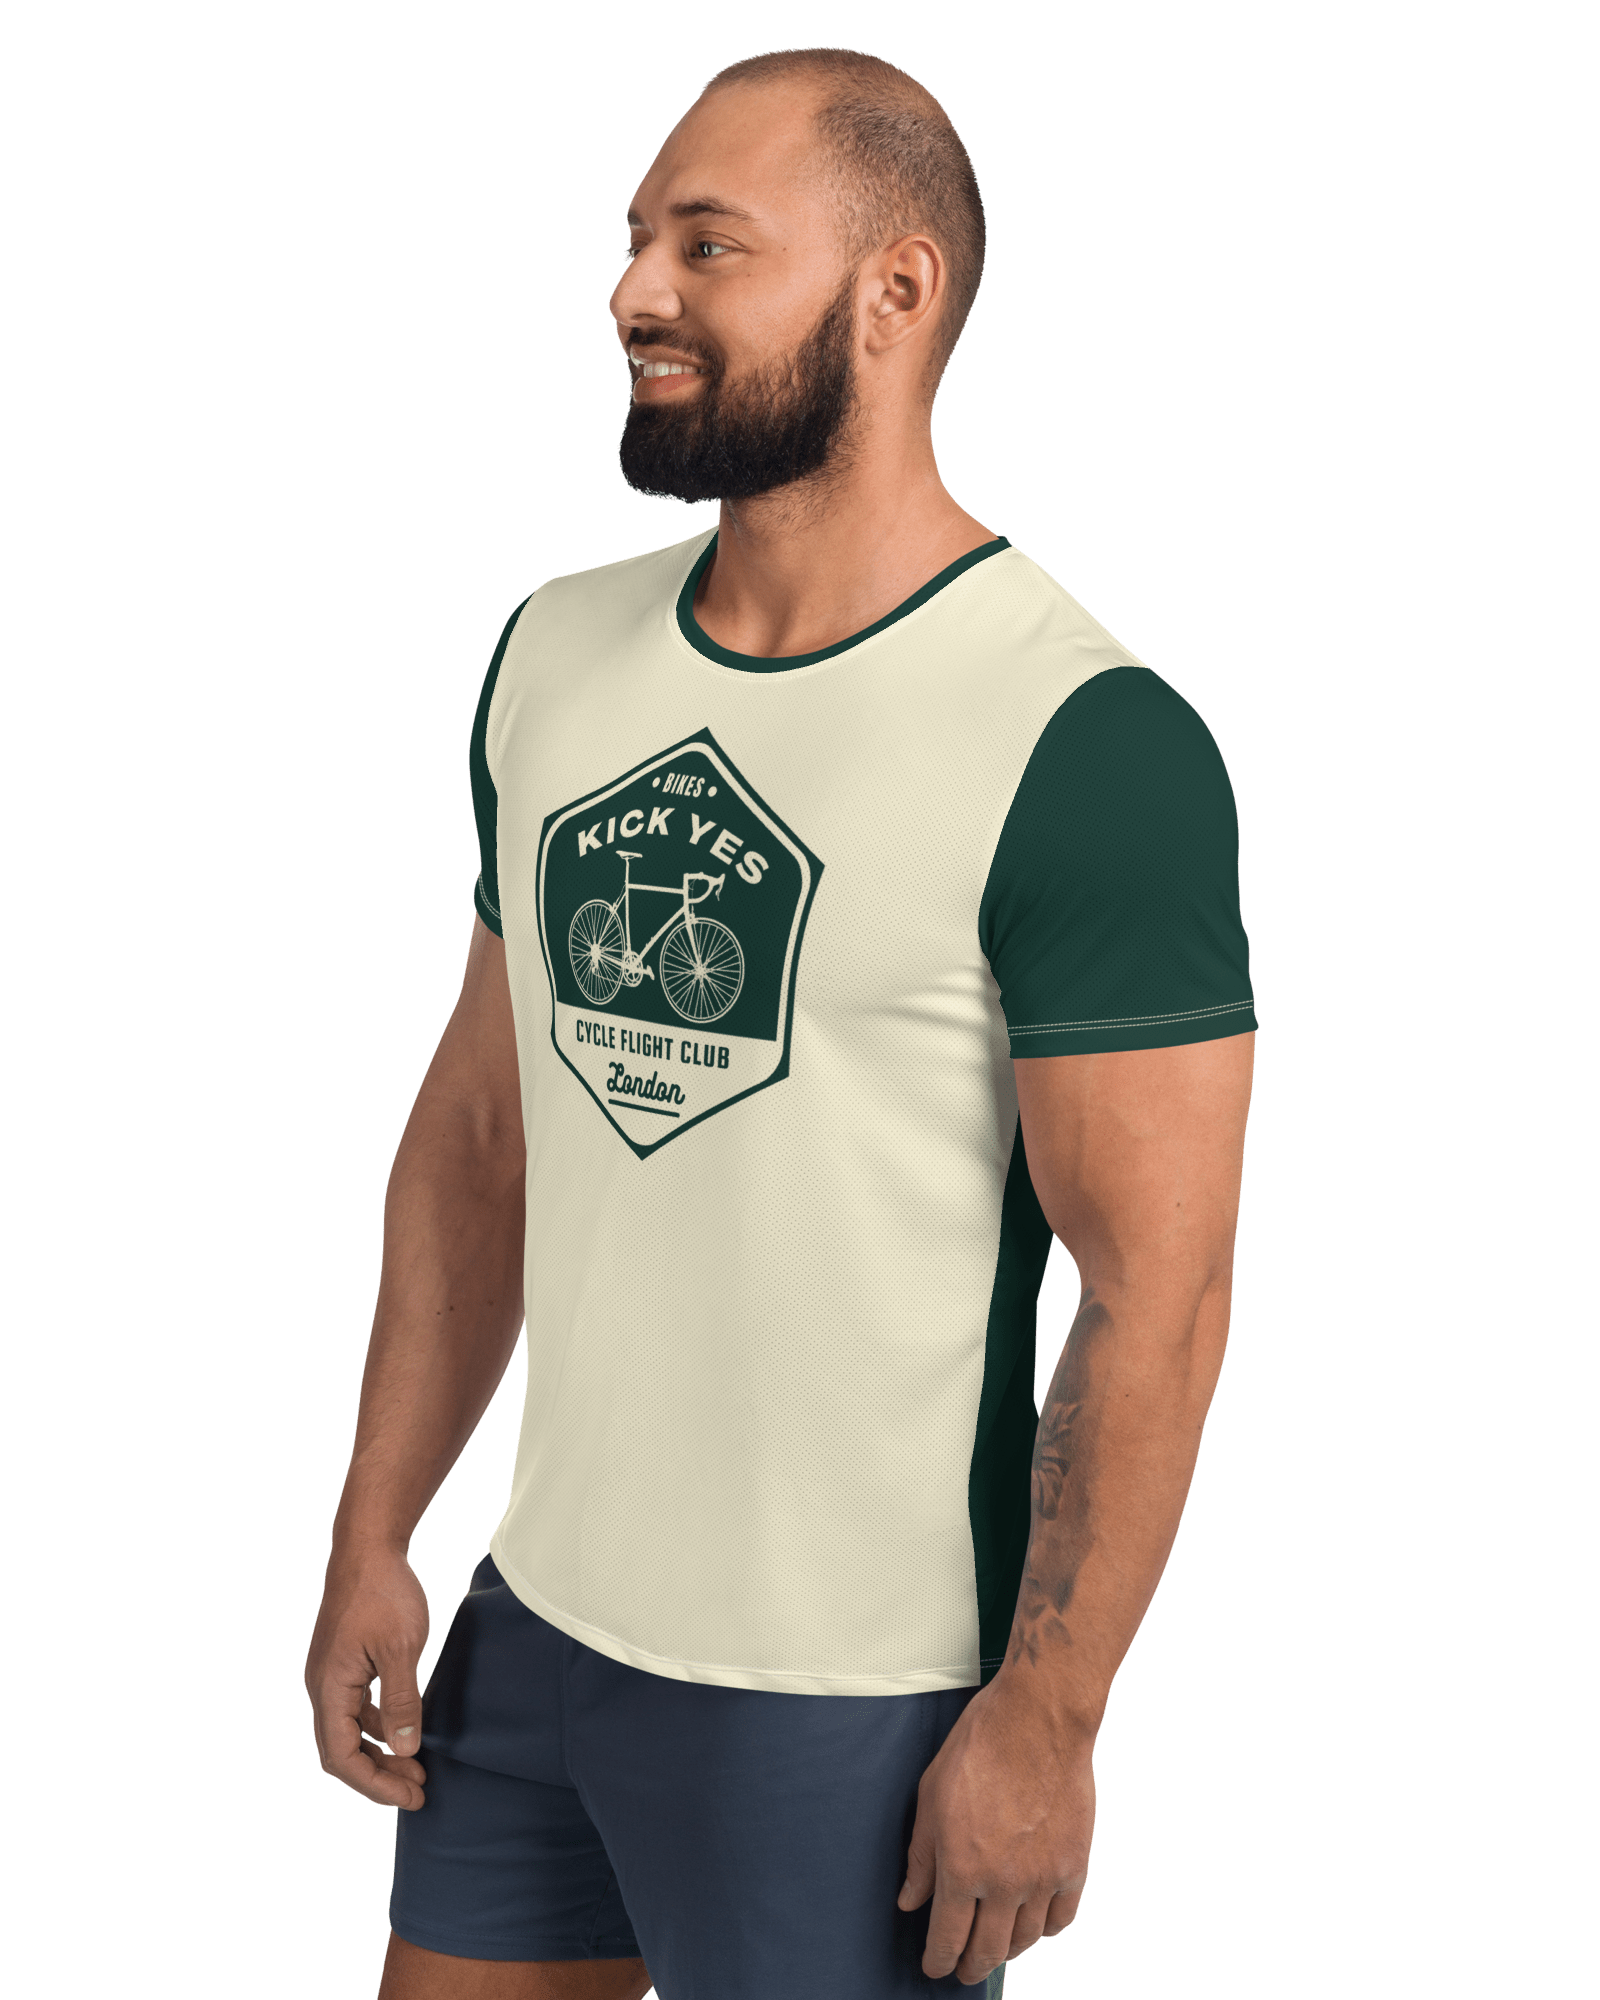 Bikes Kick Yes, Cycle Flight Club London Men's Athletic Shirt men's athletic shirts Jolly & Goode